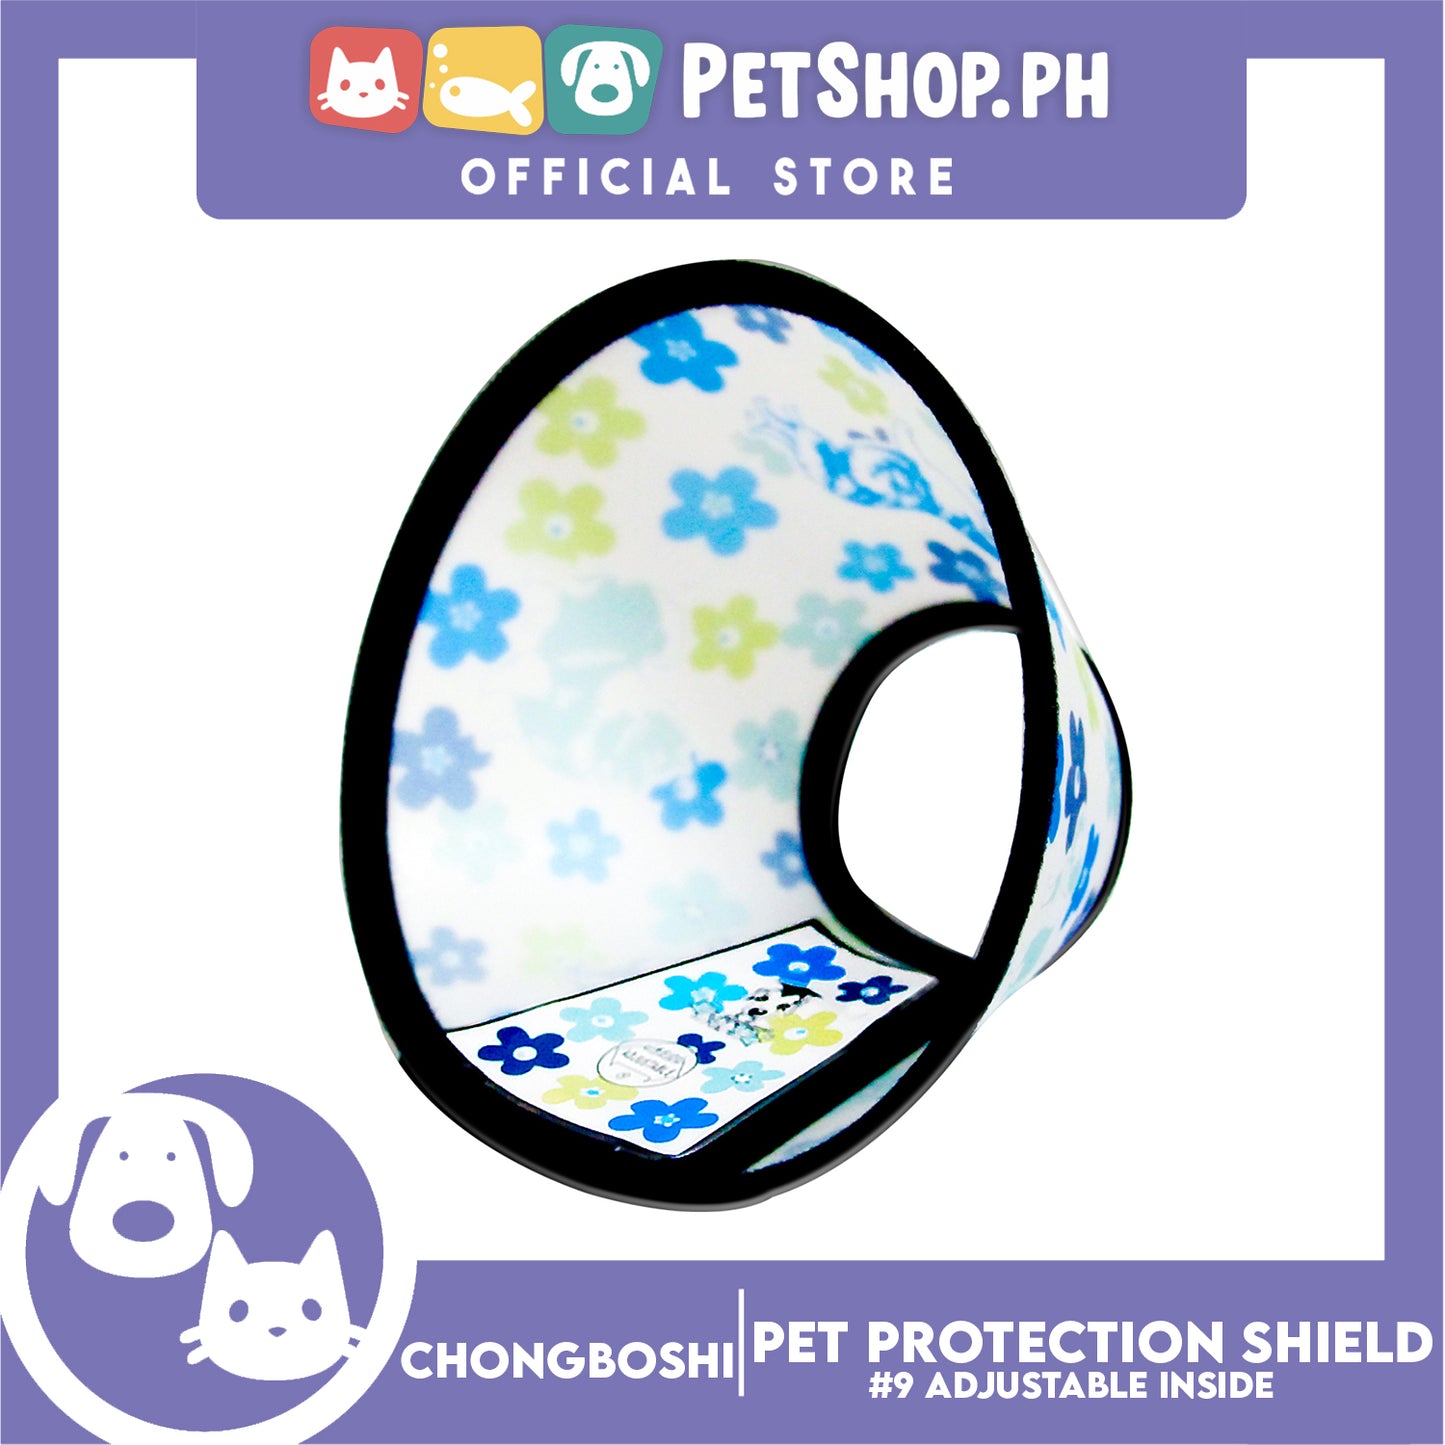 Chongboshi Pet Protection Shield #9 Anti-Lick Anti-Bite Protection Cover Neck Cone